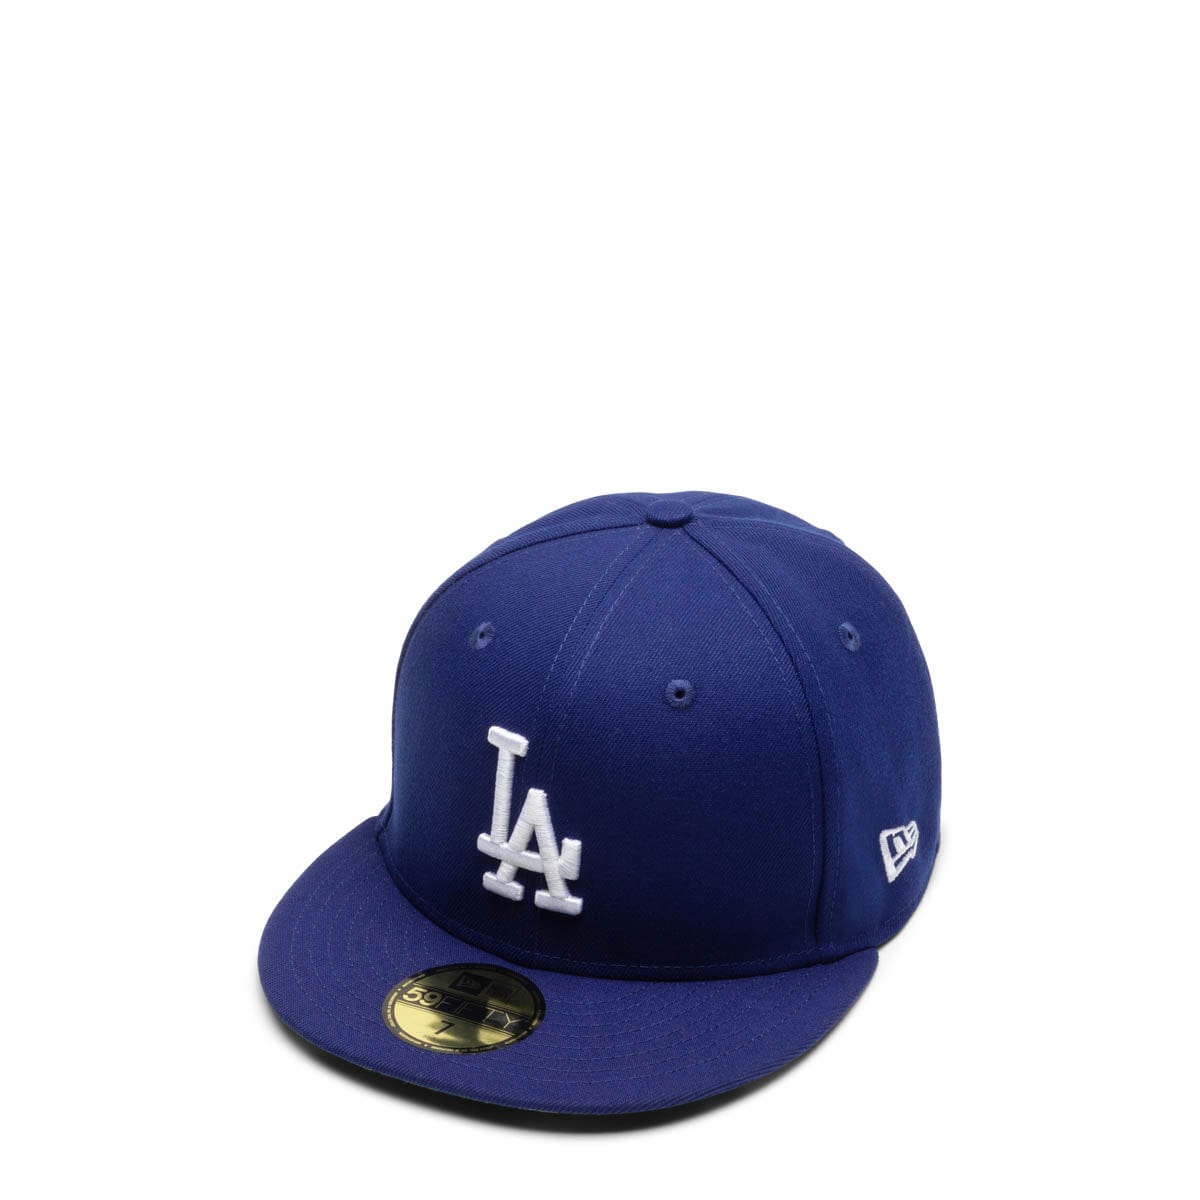 OFF-WHITE x MLB Los Angeles Dodgers Hoodie Cream/Blue Men's - US